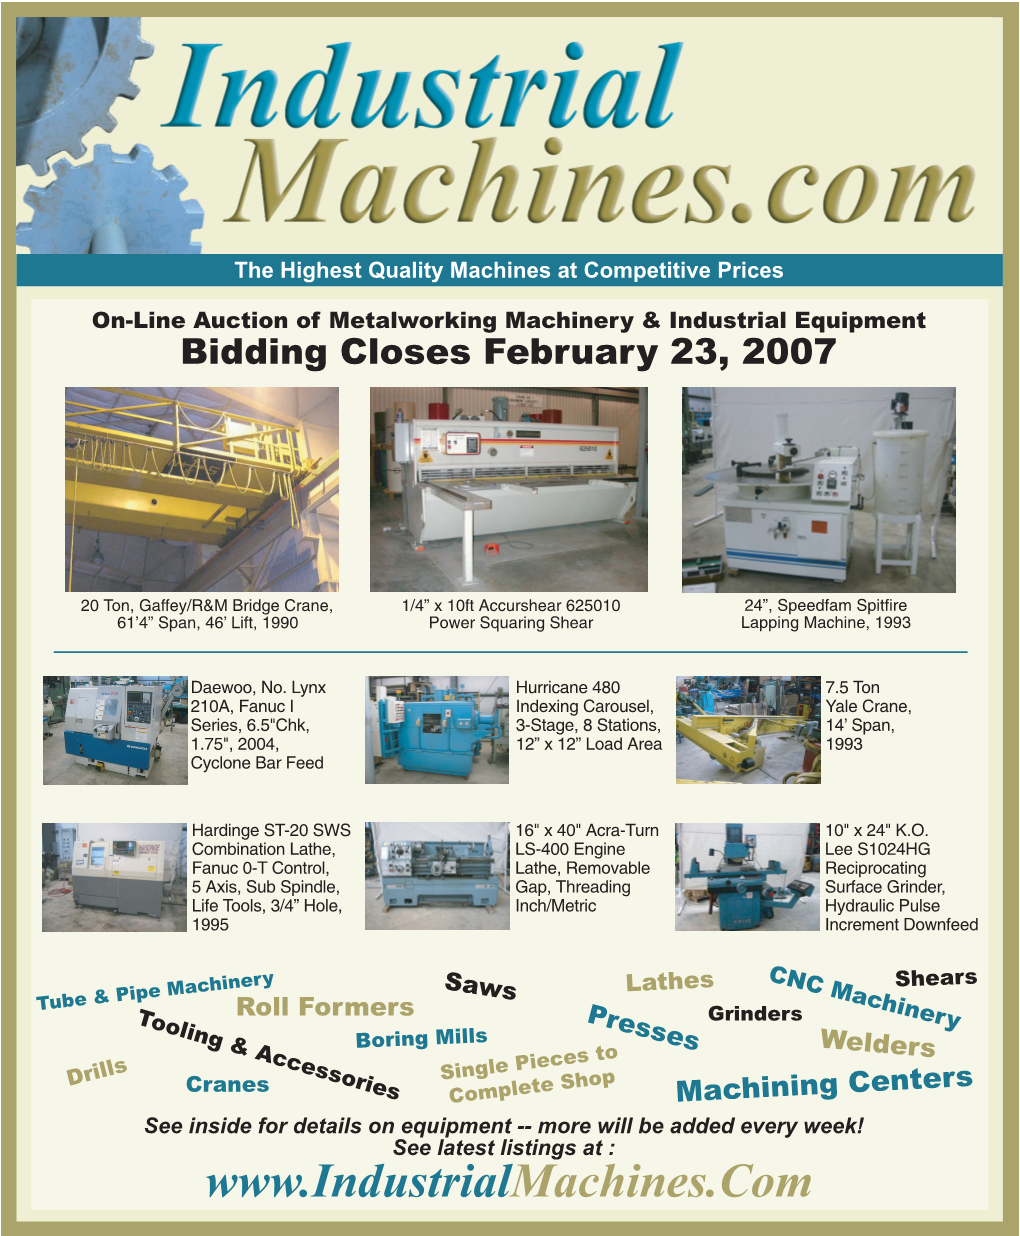 Sell Your Surplus Equipment Through Industrialmachines.Com Auctions!